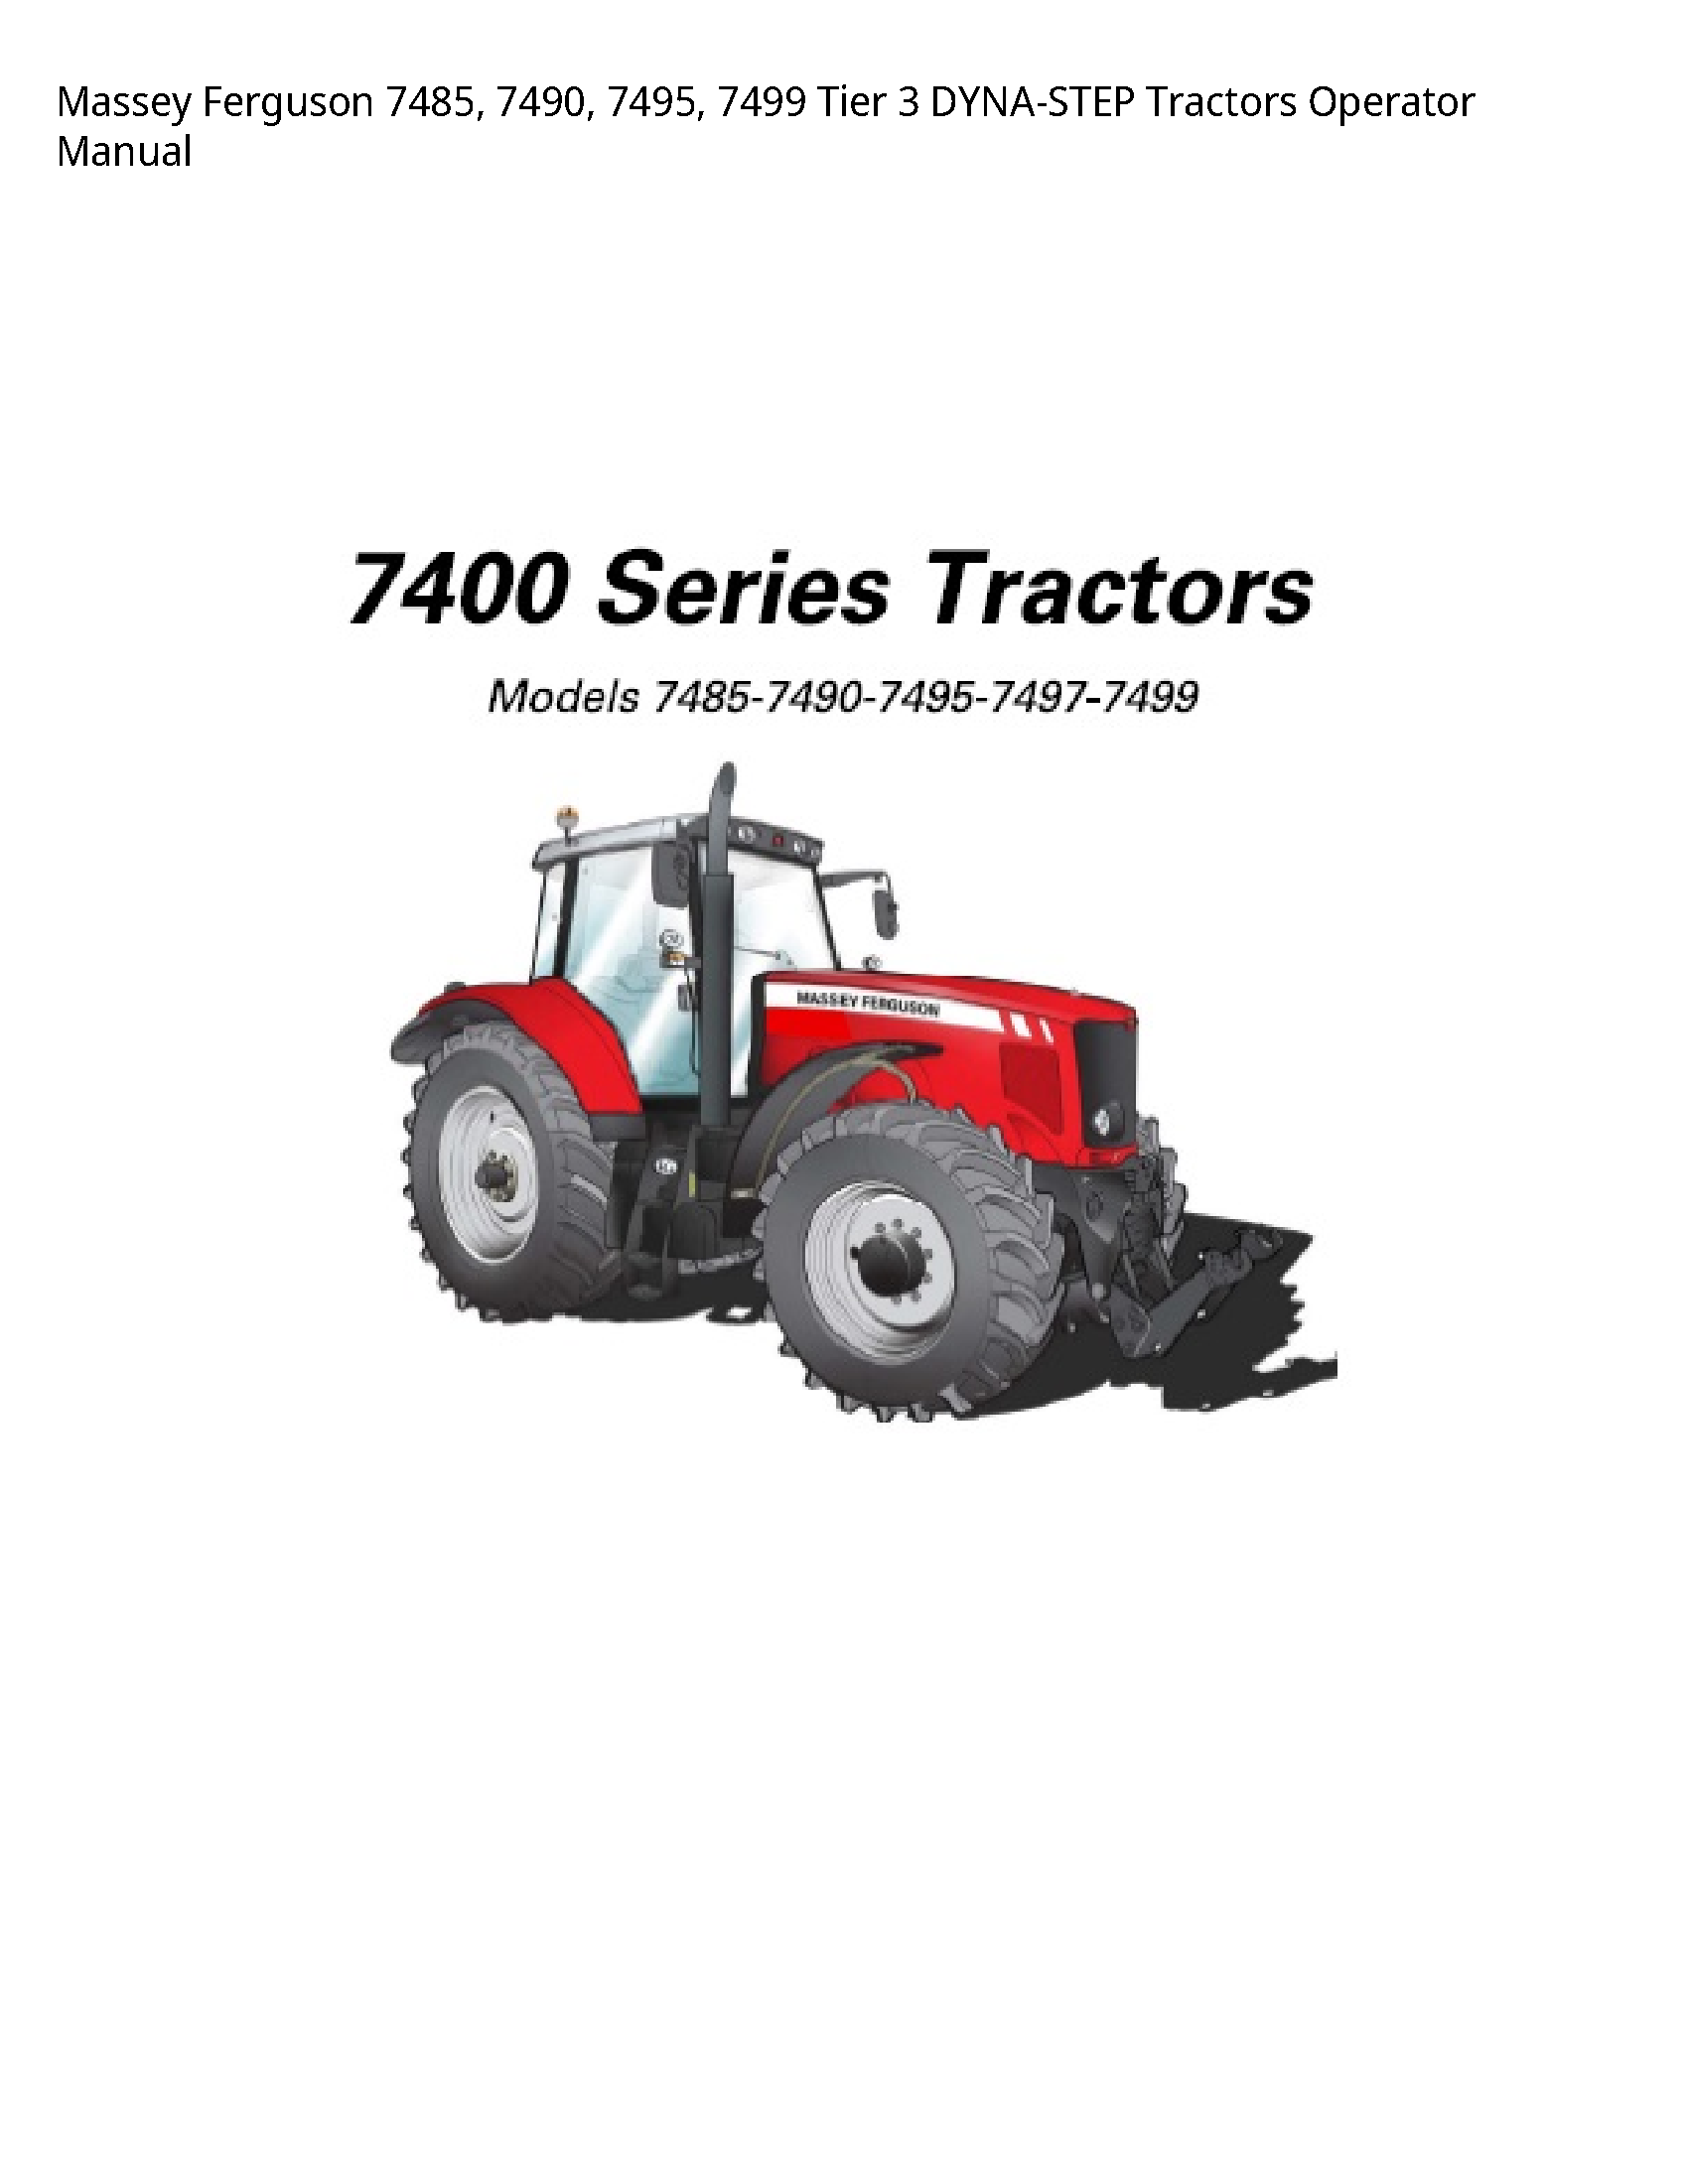 Massey Ferguson 7485 Tier DYNA-STEP Tractors Operator manual